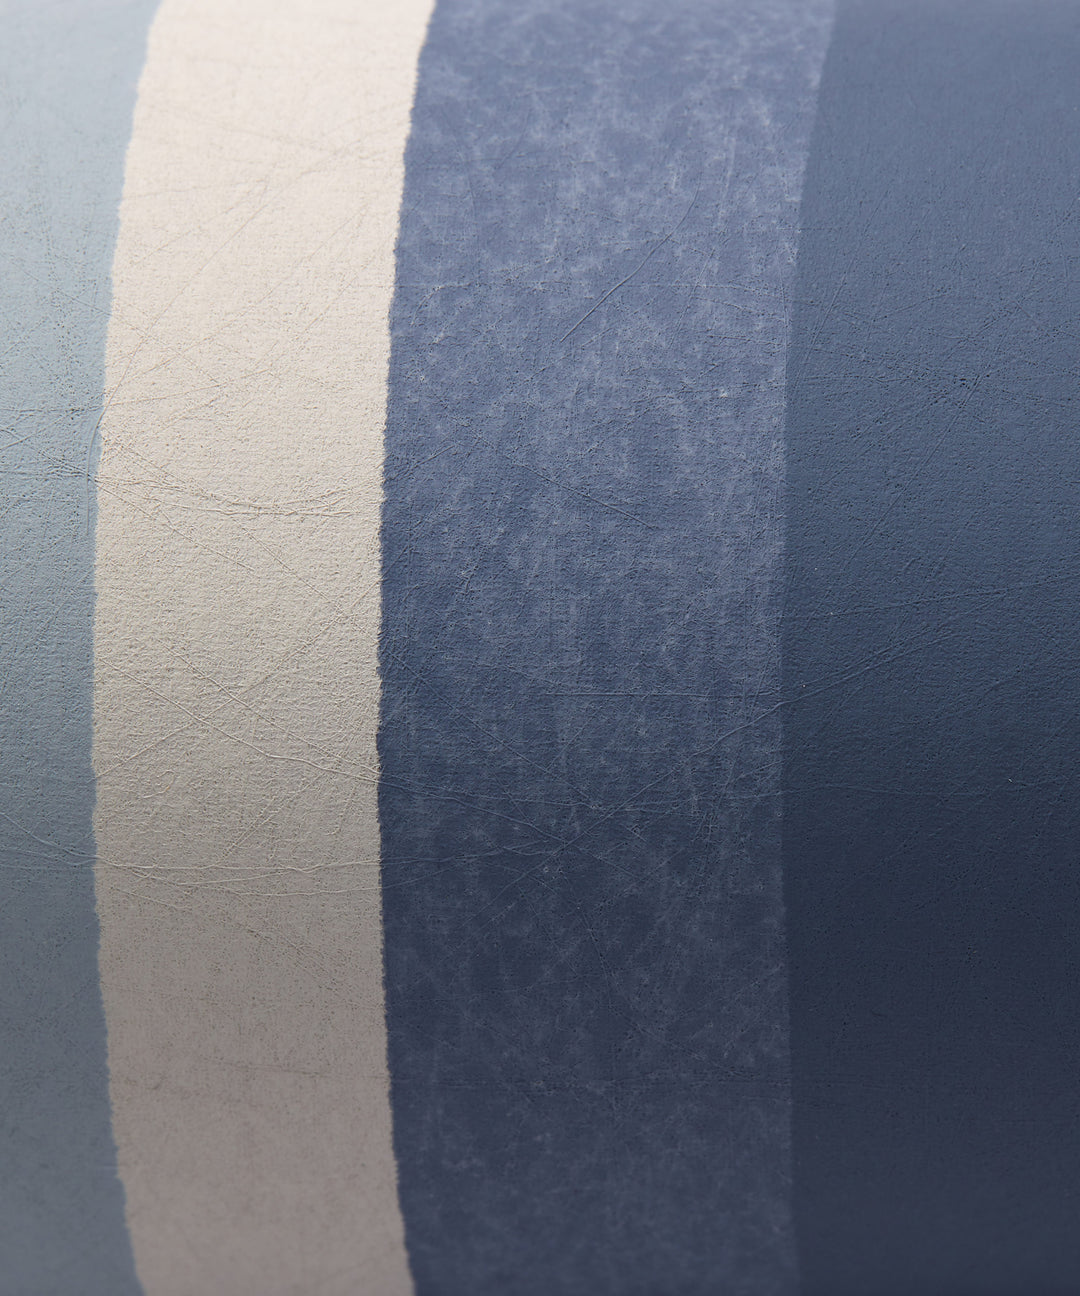 Liberty-botanical-atlas-obi-stripe-wallpaper-lapis-blue-white